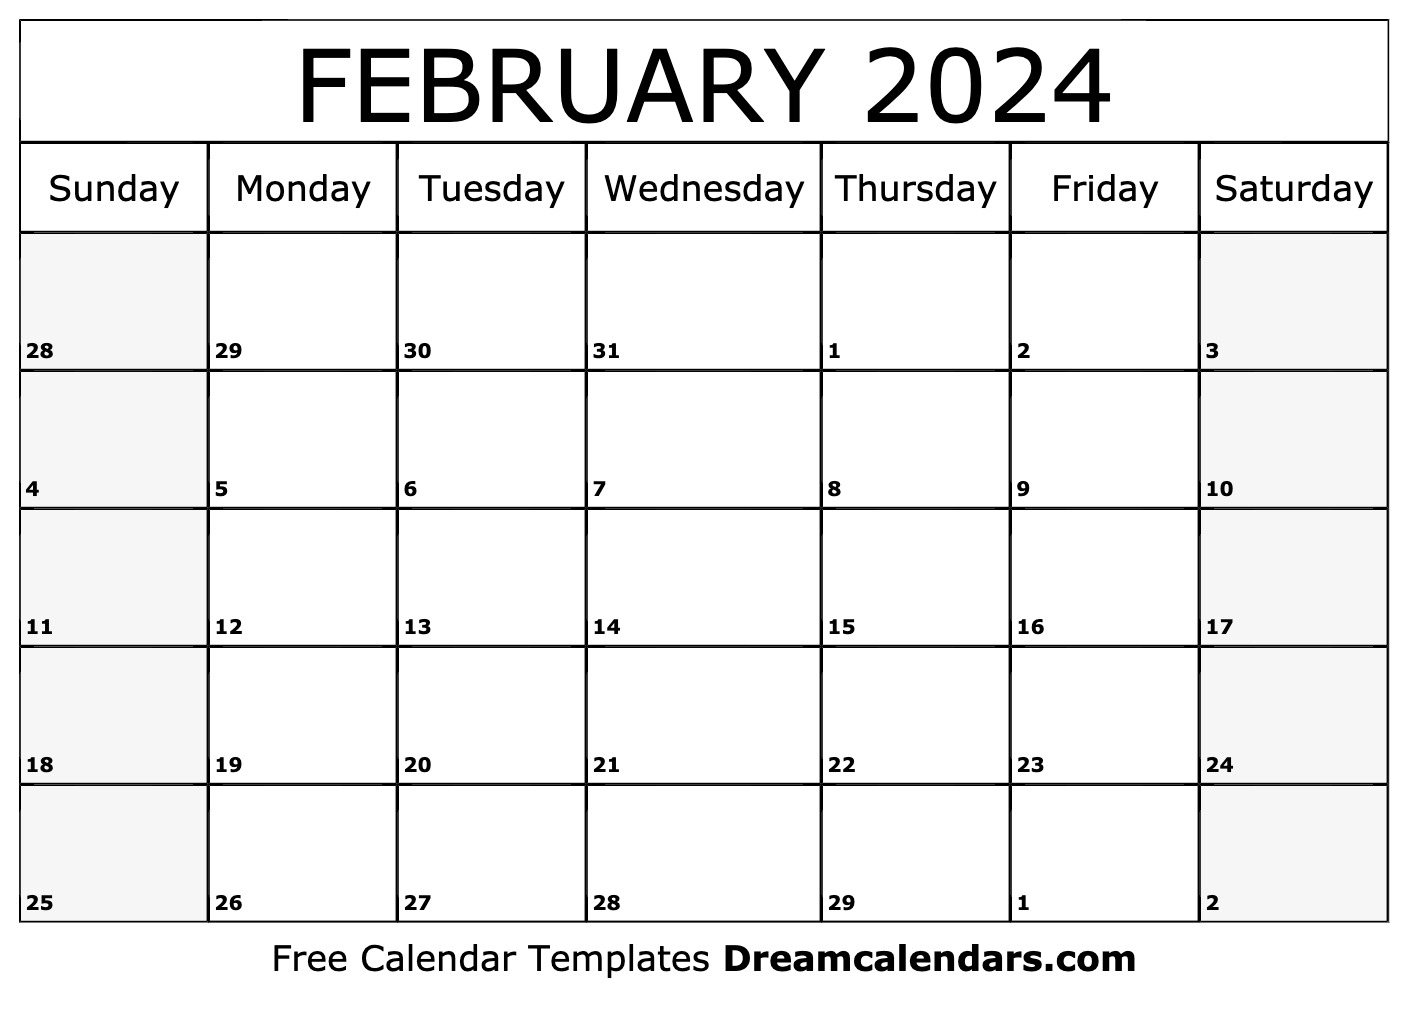 February Days Name List 2024 Latest Top Popular List Of February 